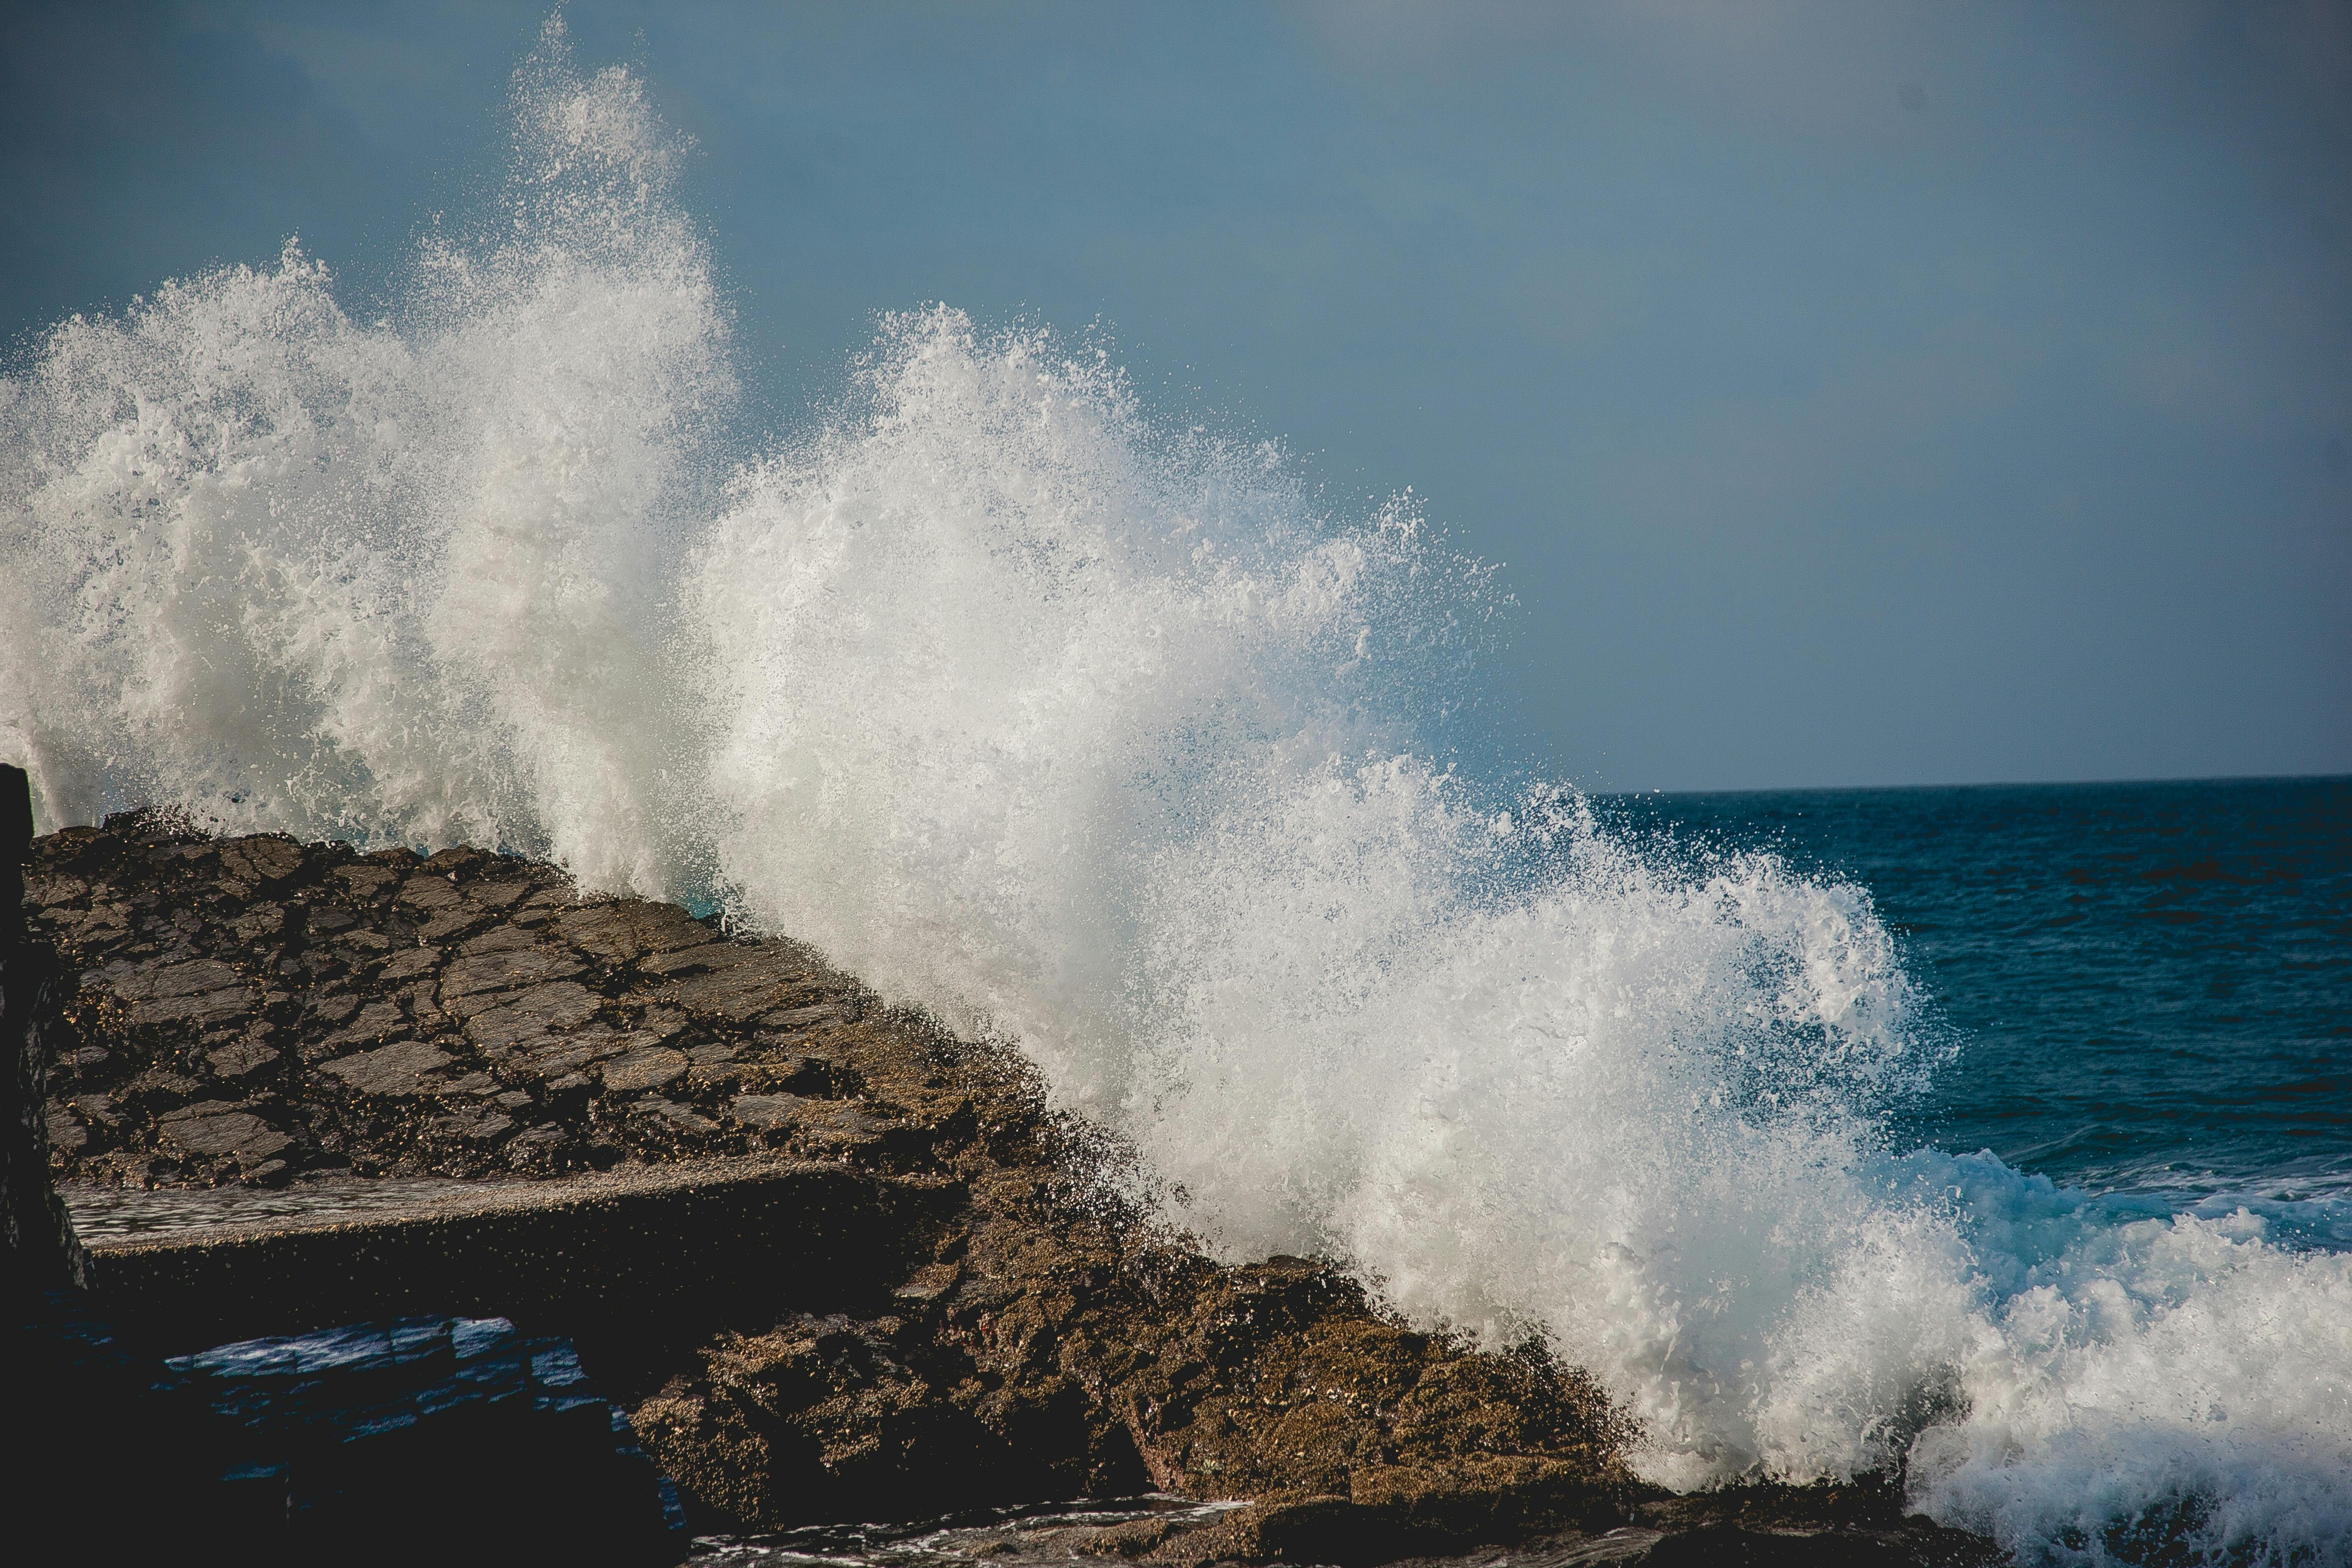 Sea Waves Hitting The Rock During Daytime · Free Stock Photo